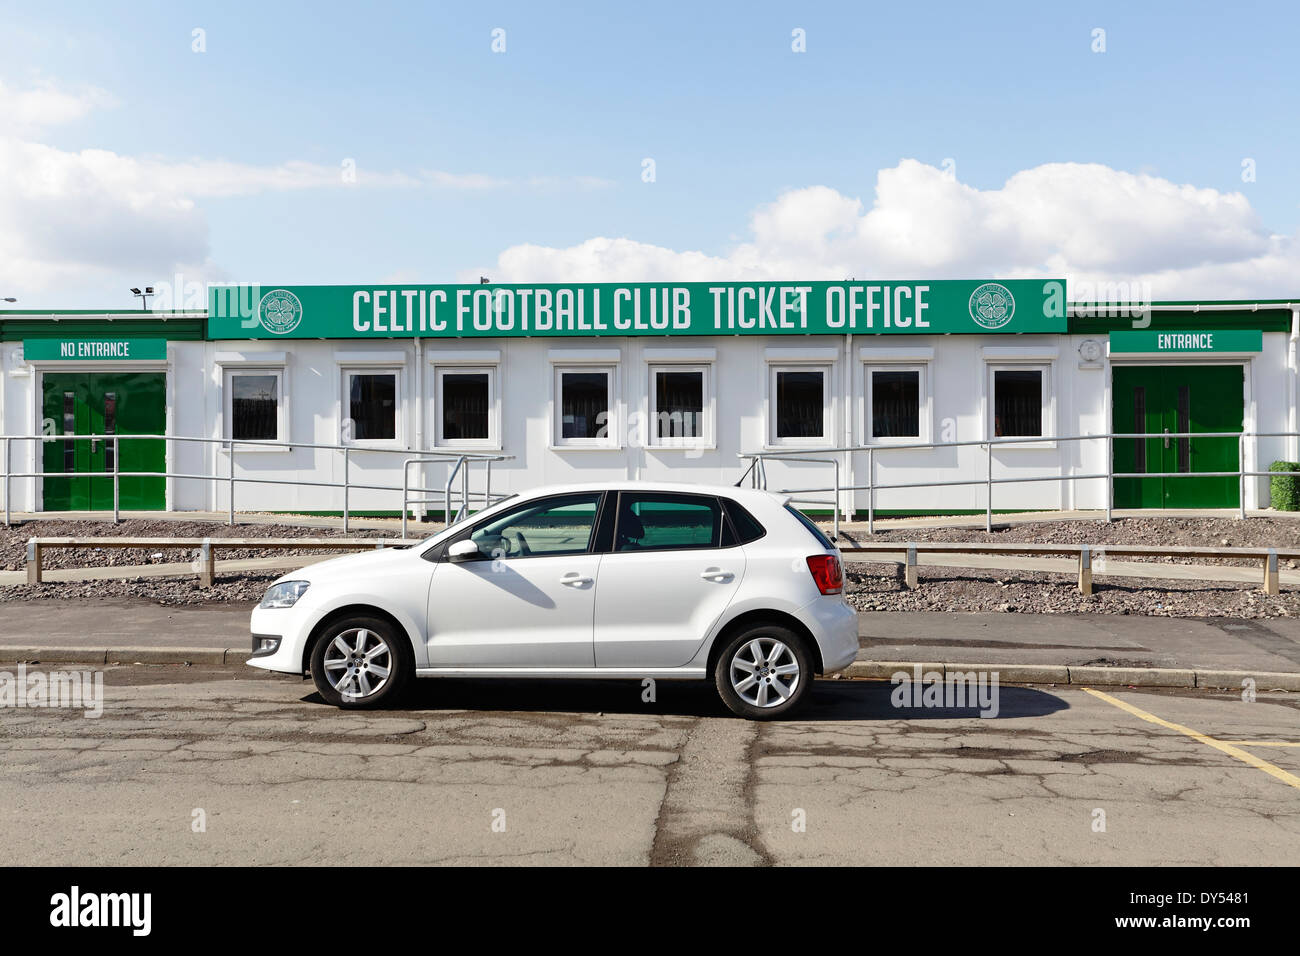 Celtic Football Club Ticket Office, Glasgow, Scotland, UK Stock Photo